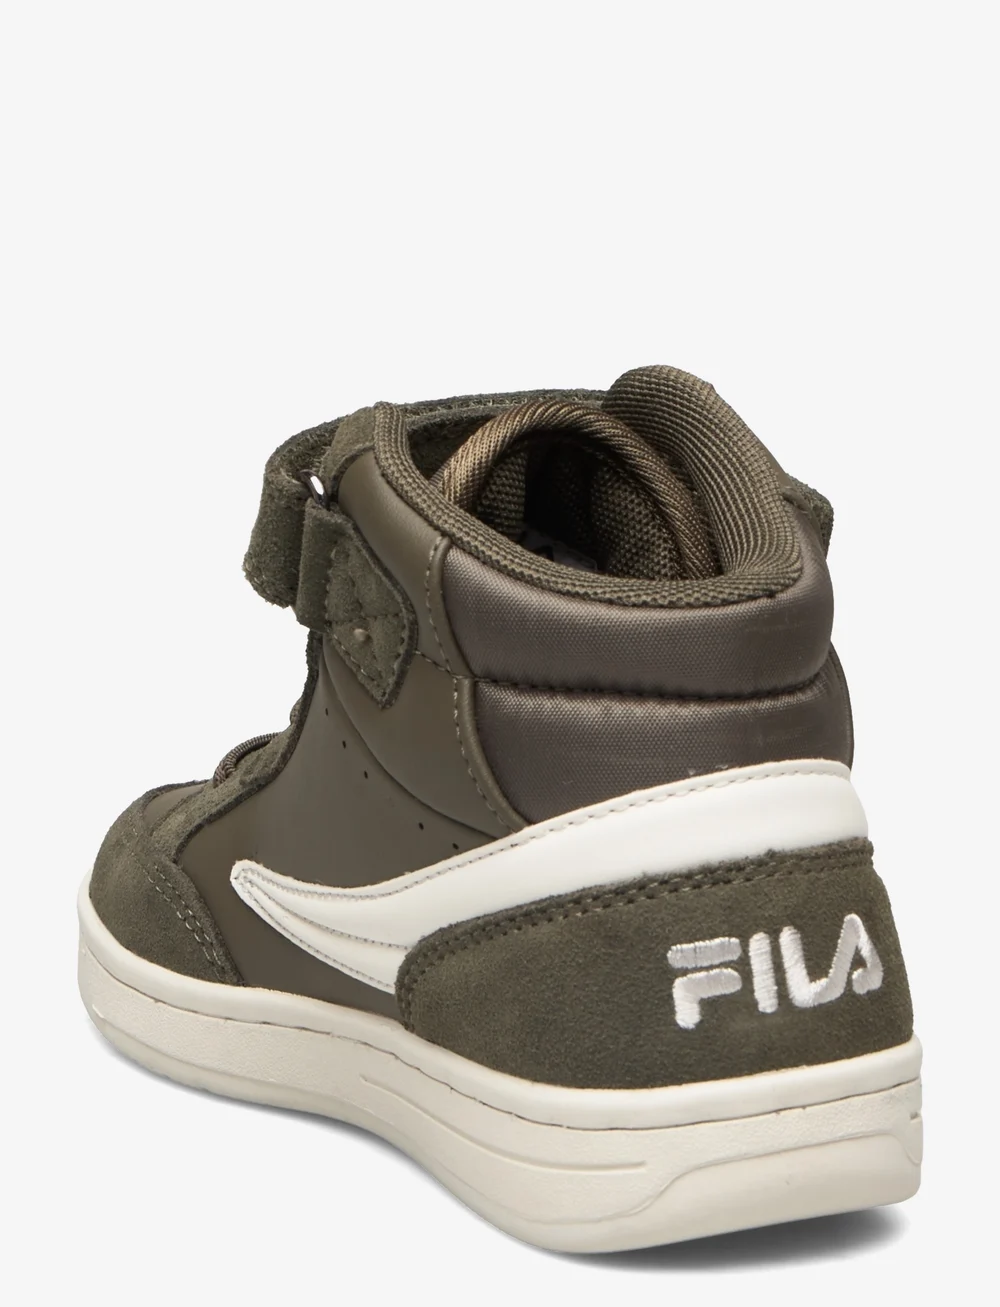 FILA Fila Crew Velcro Mid Kids - High Tops